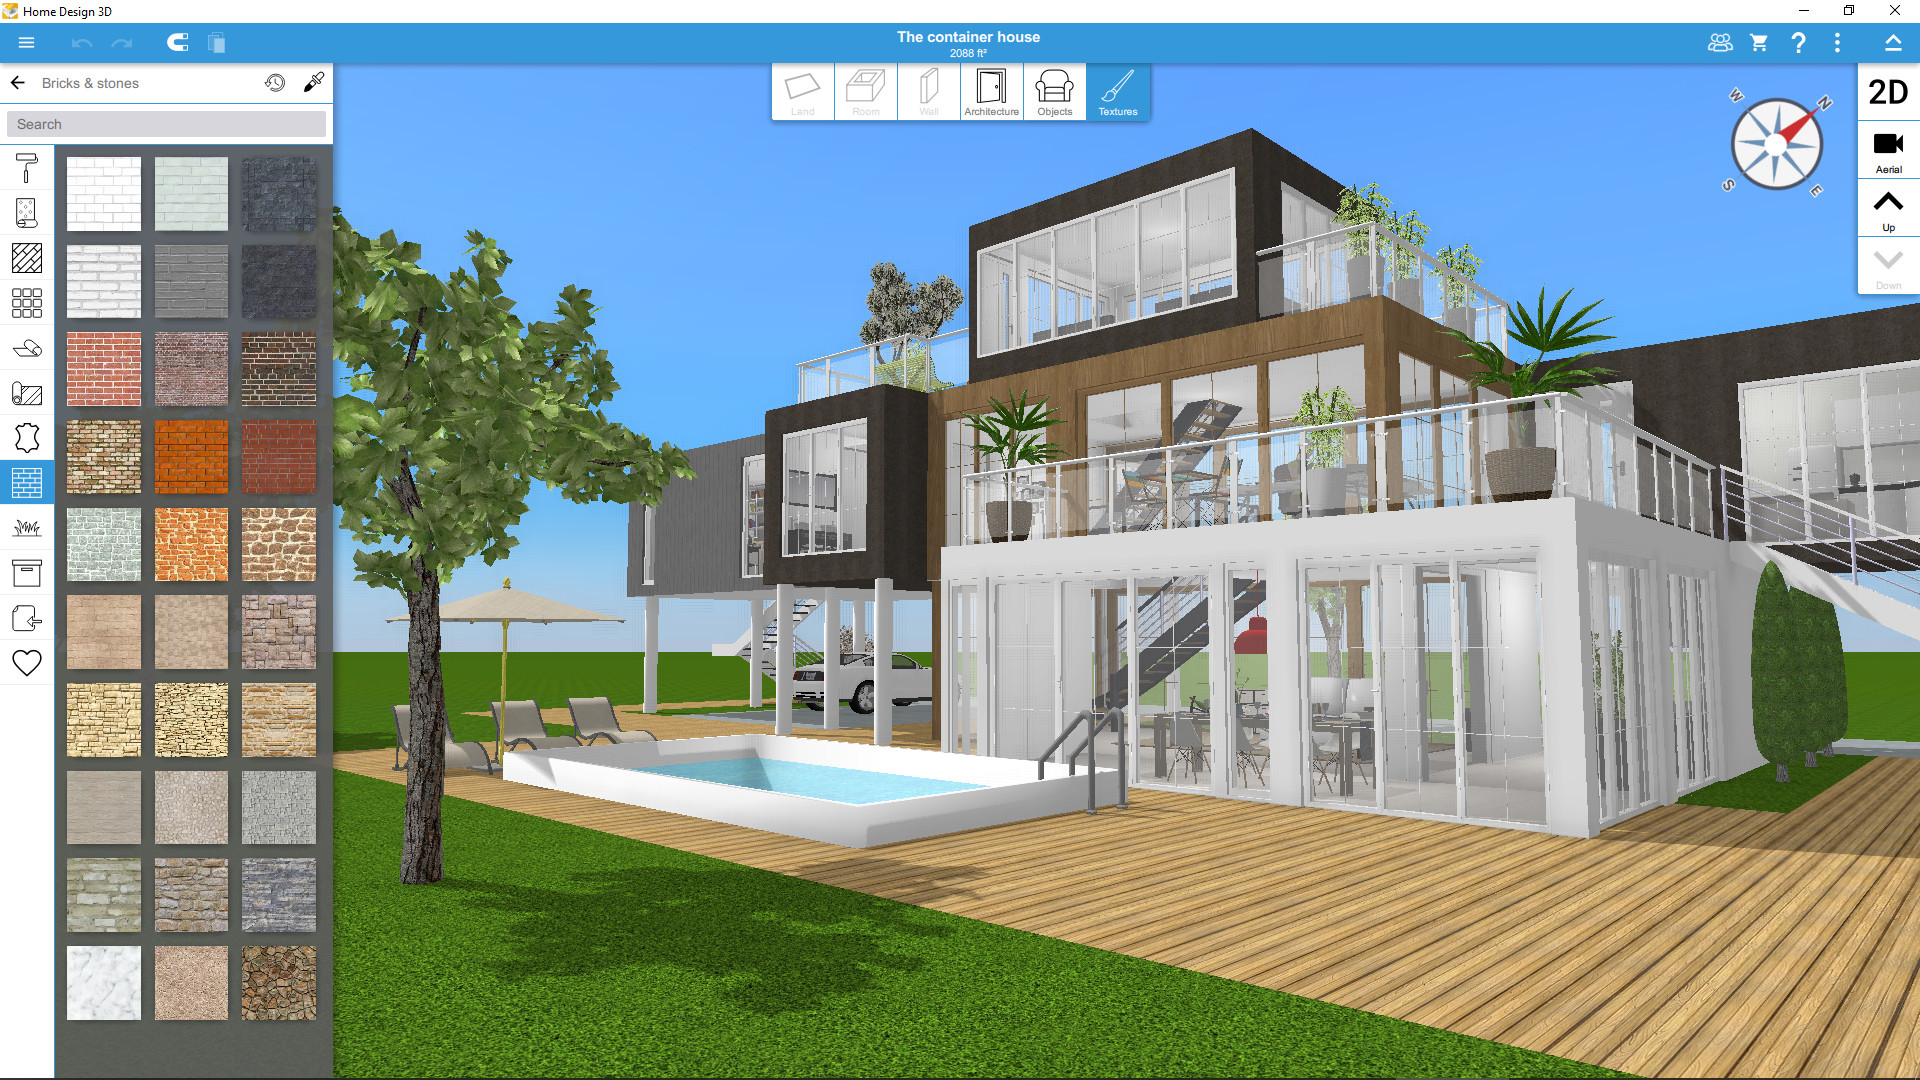 Home Design 3d On Steam